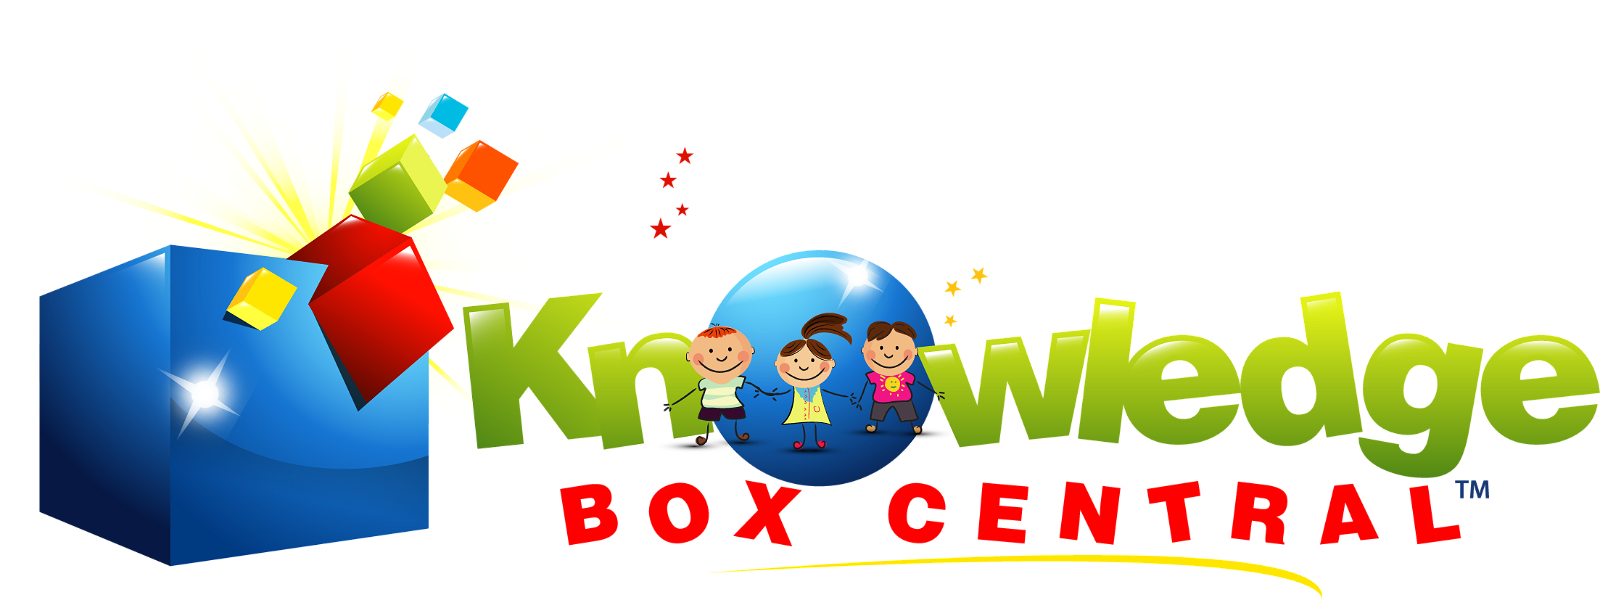 Knowledge Box Central Logo Image